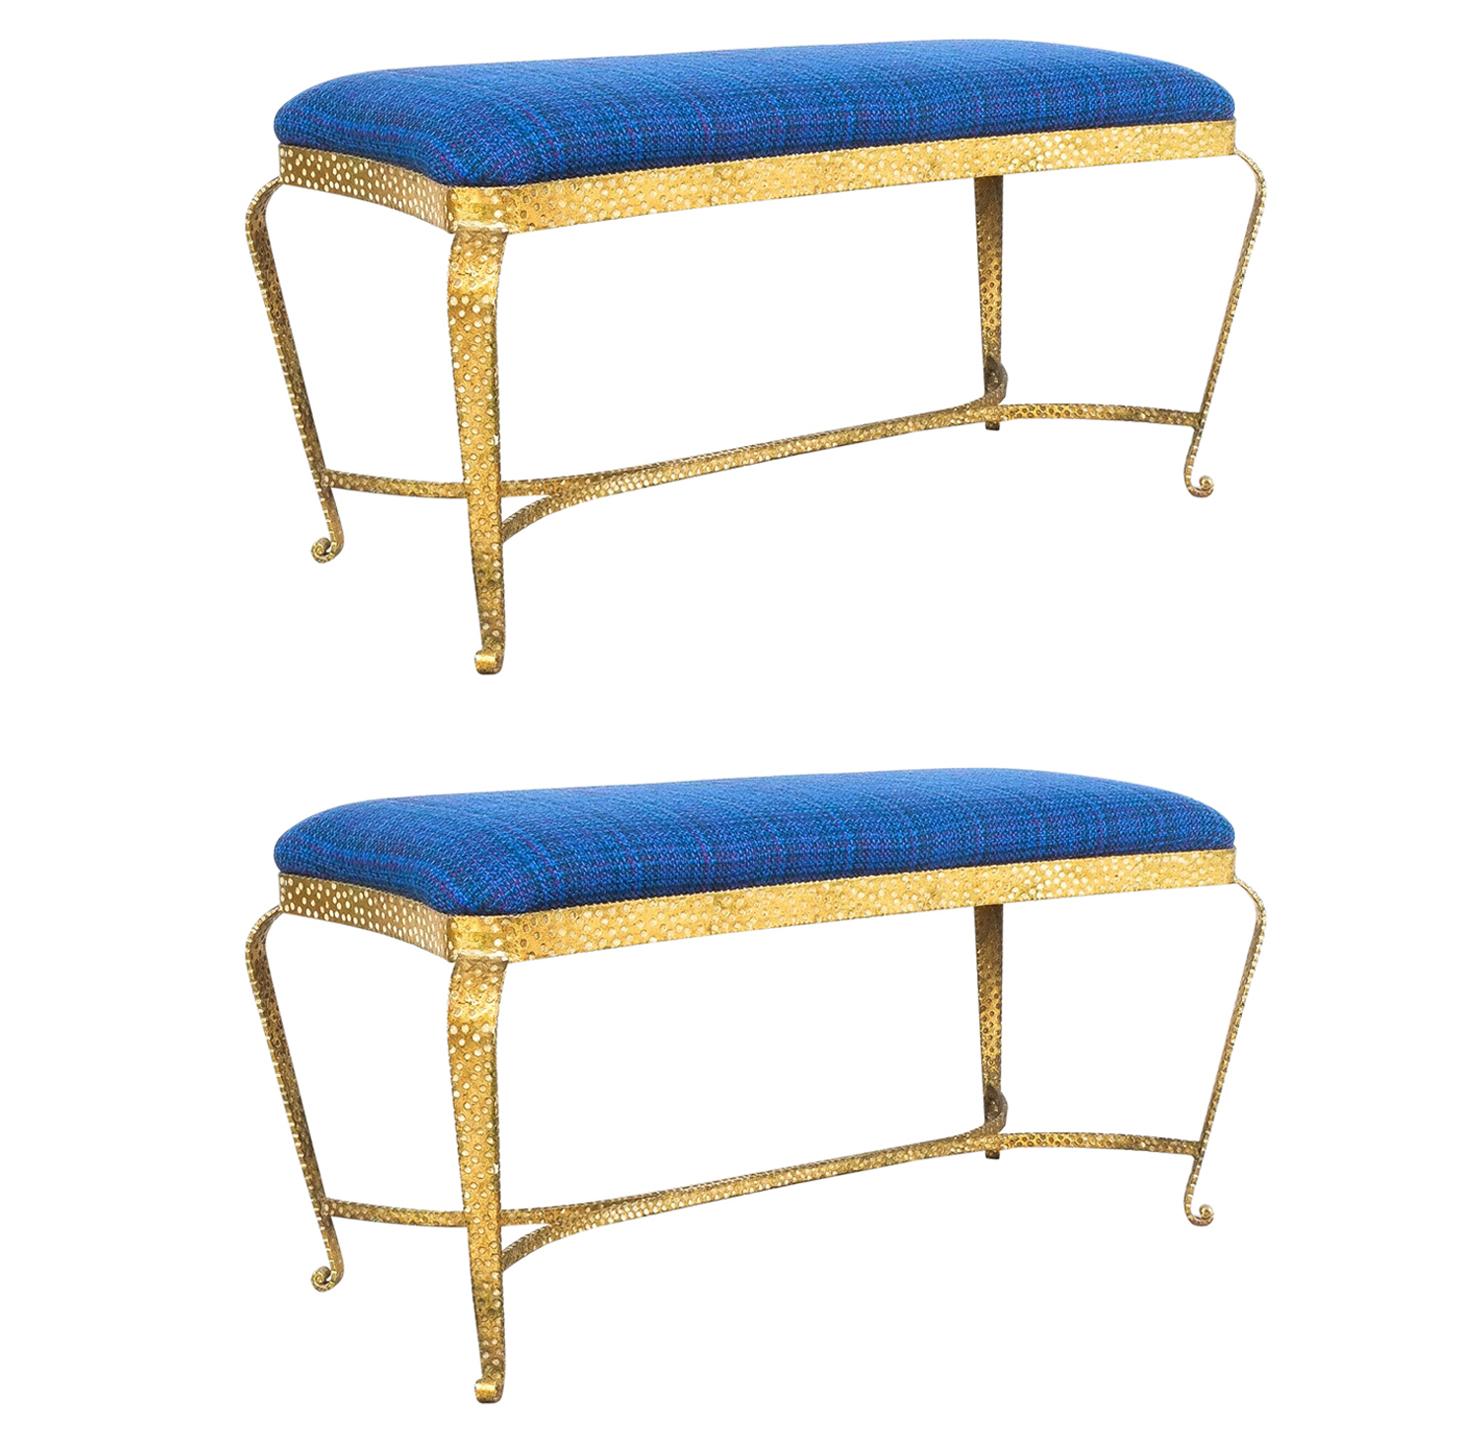 Pair of Pier Luigi Colli Gold Iron Bedroom Benches Blue Fabric, Italy, 1950